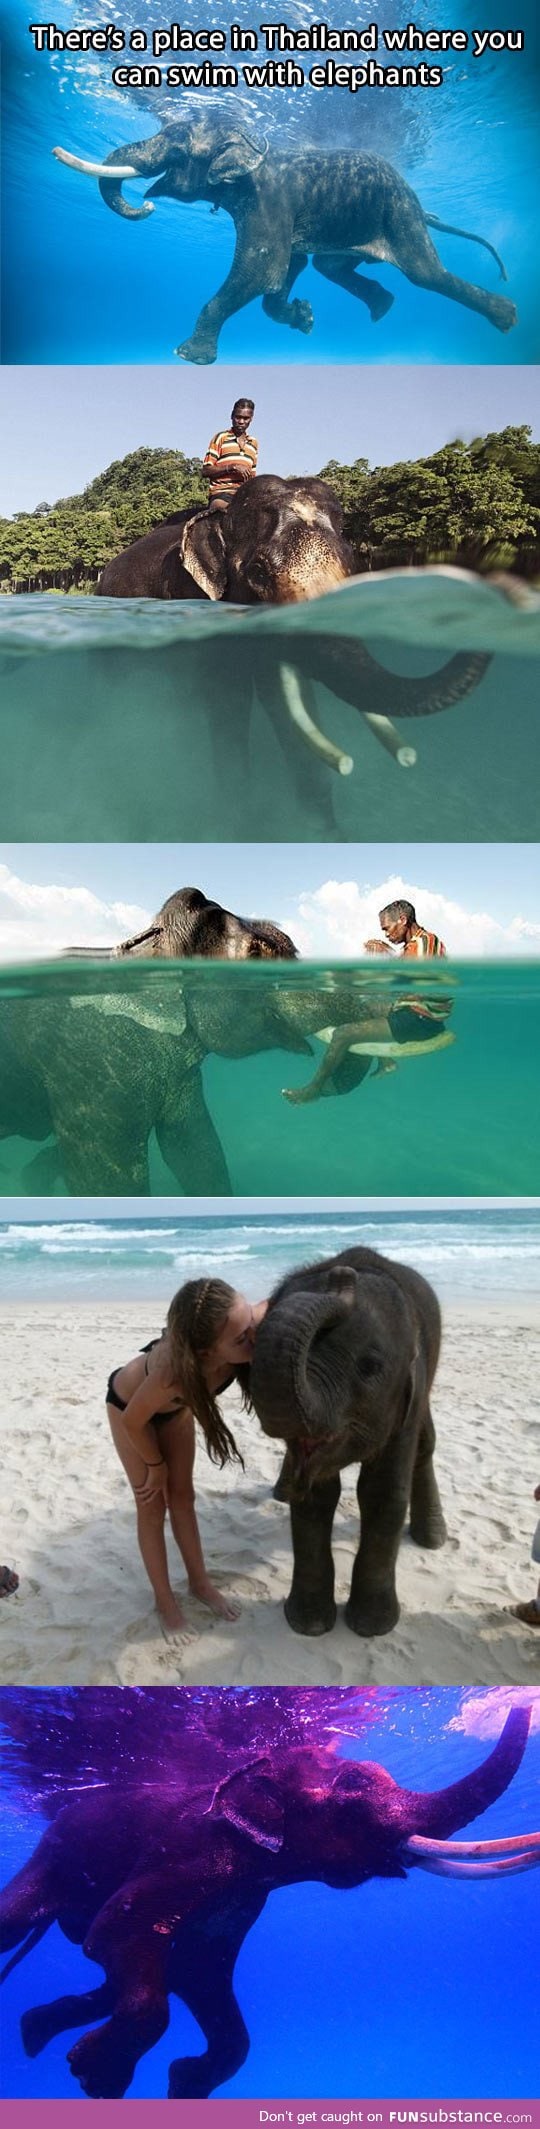 Swim with elephants